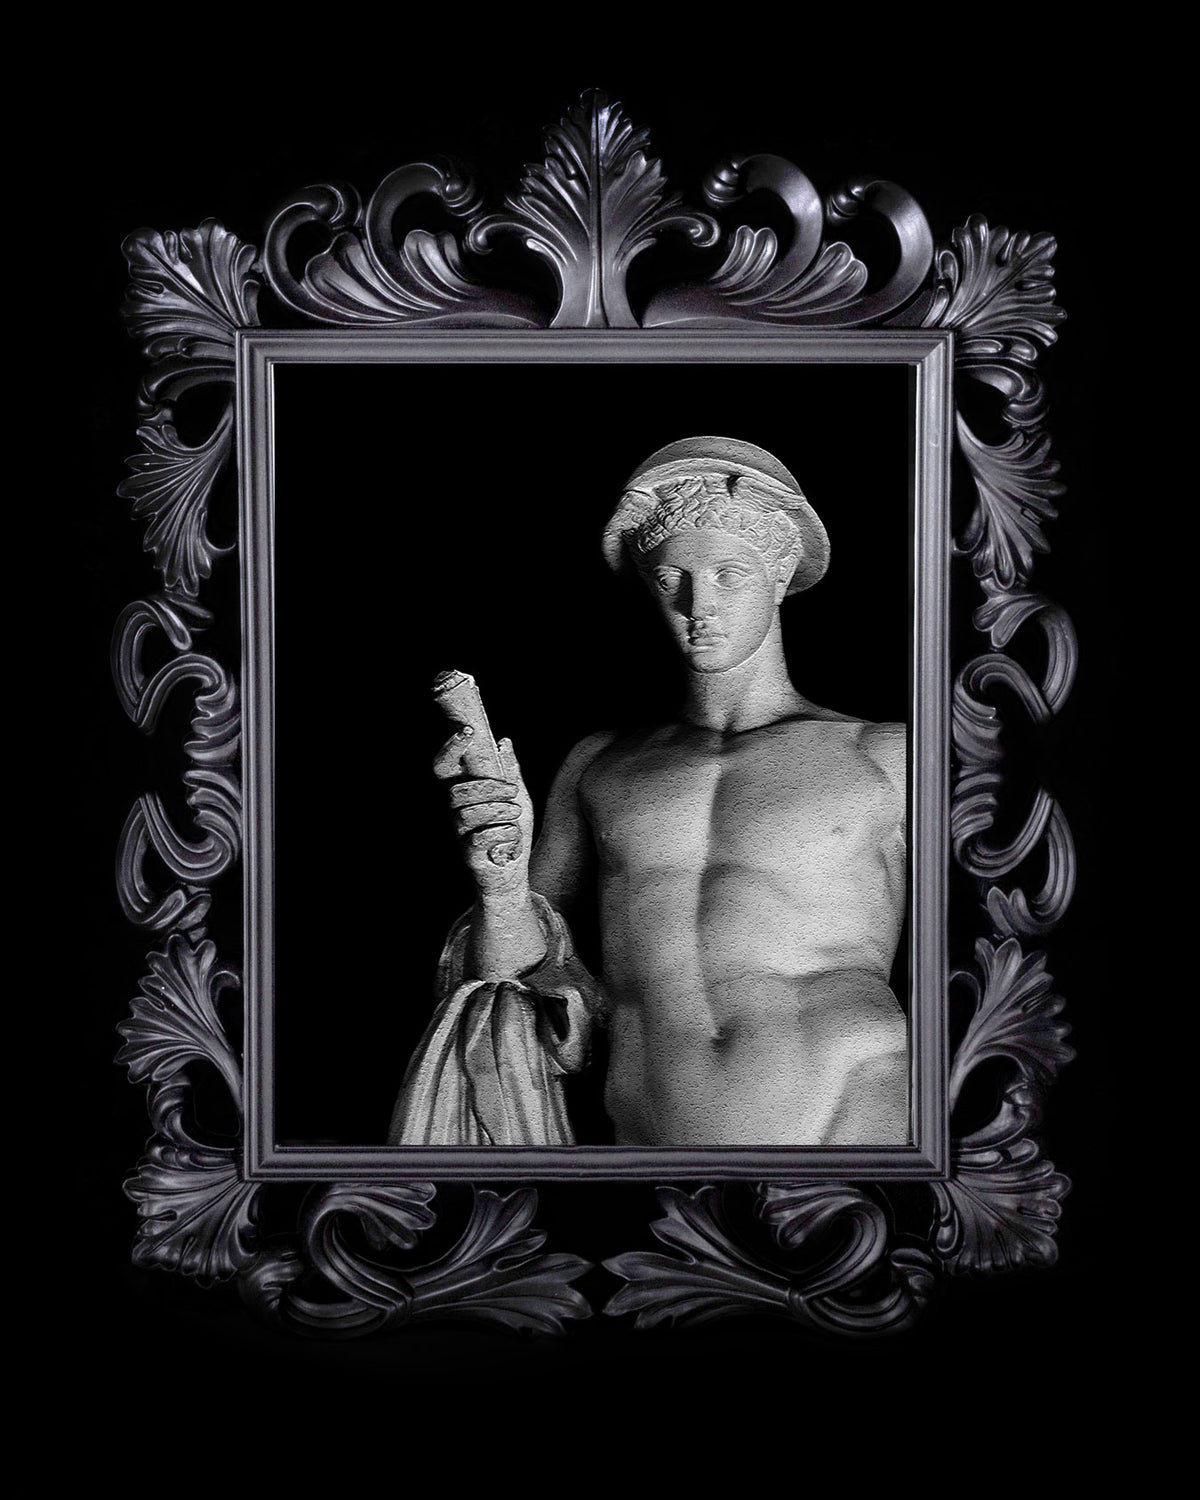 Hermes shipping artwork, framed photograph of statue